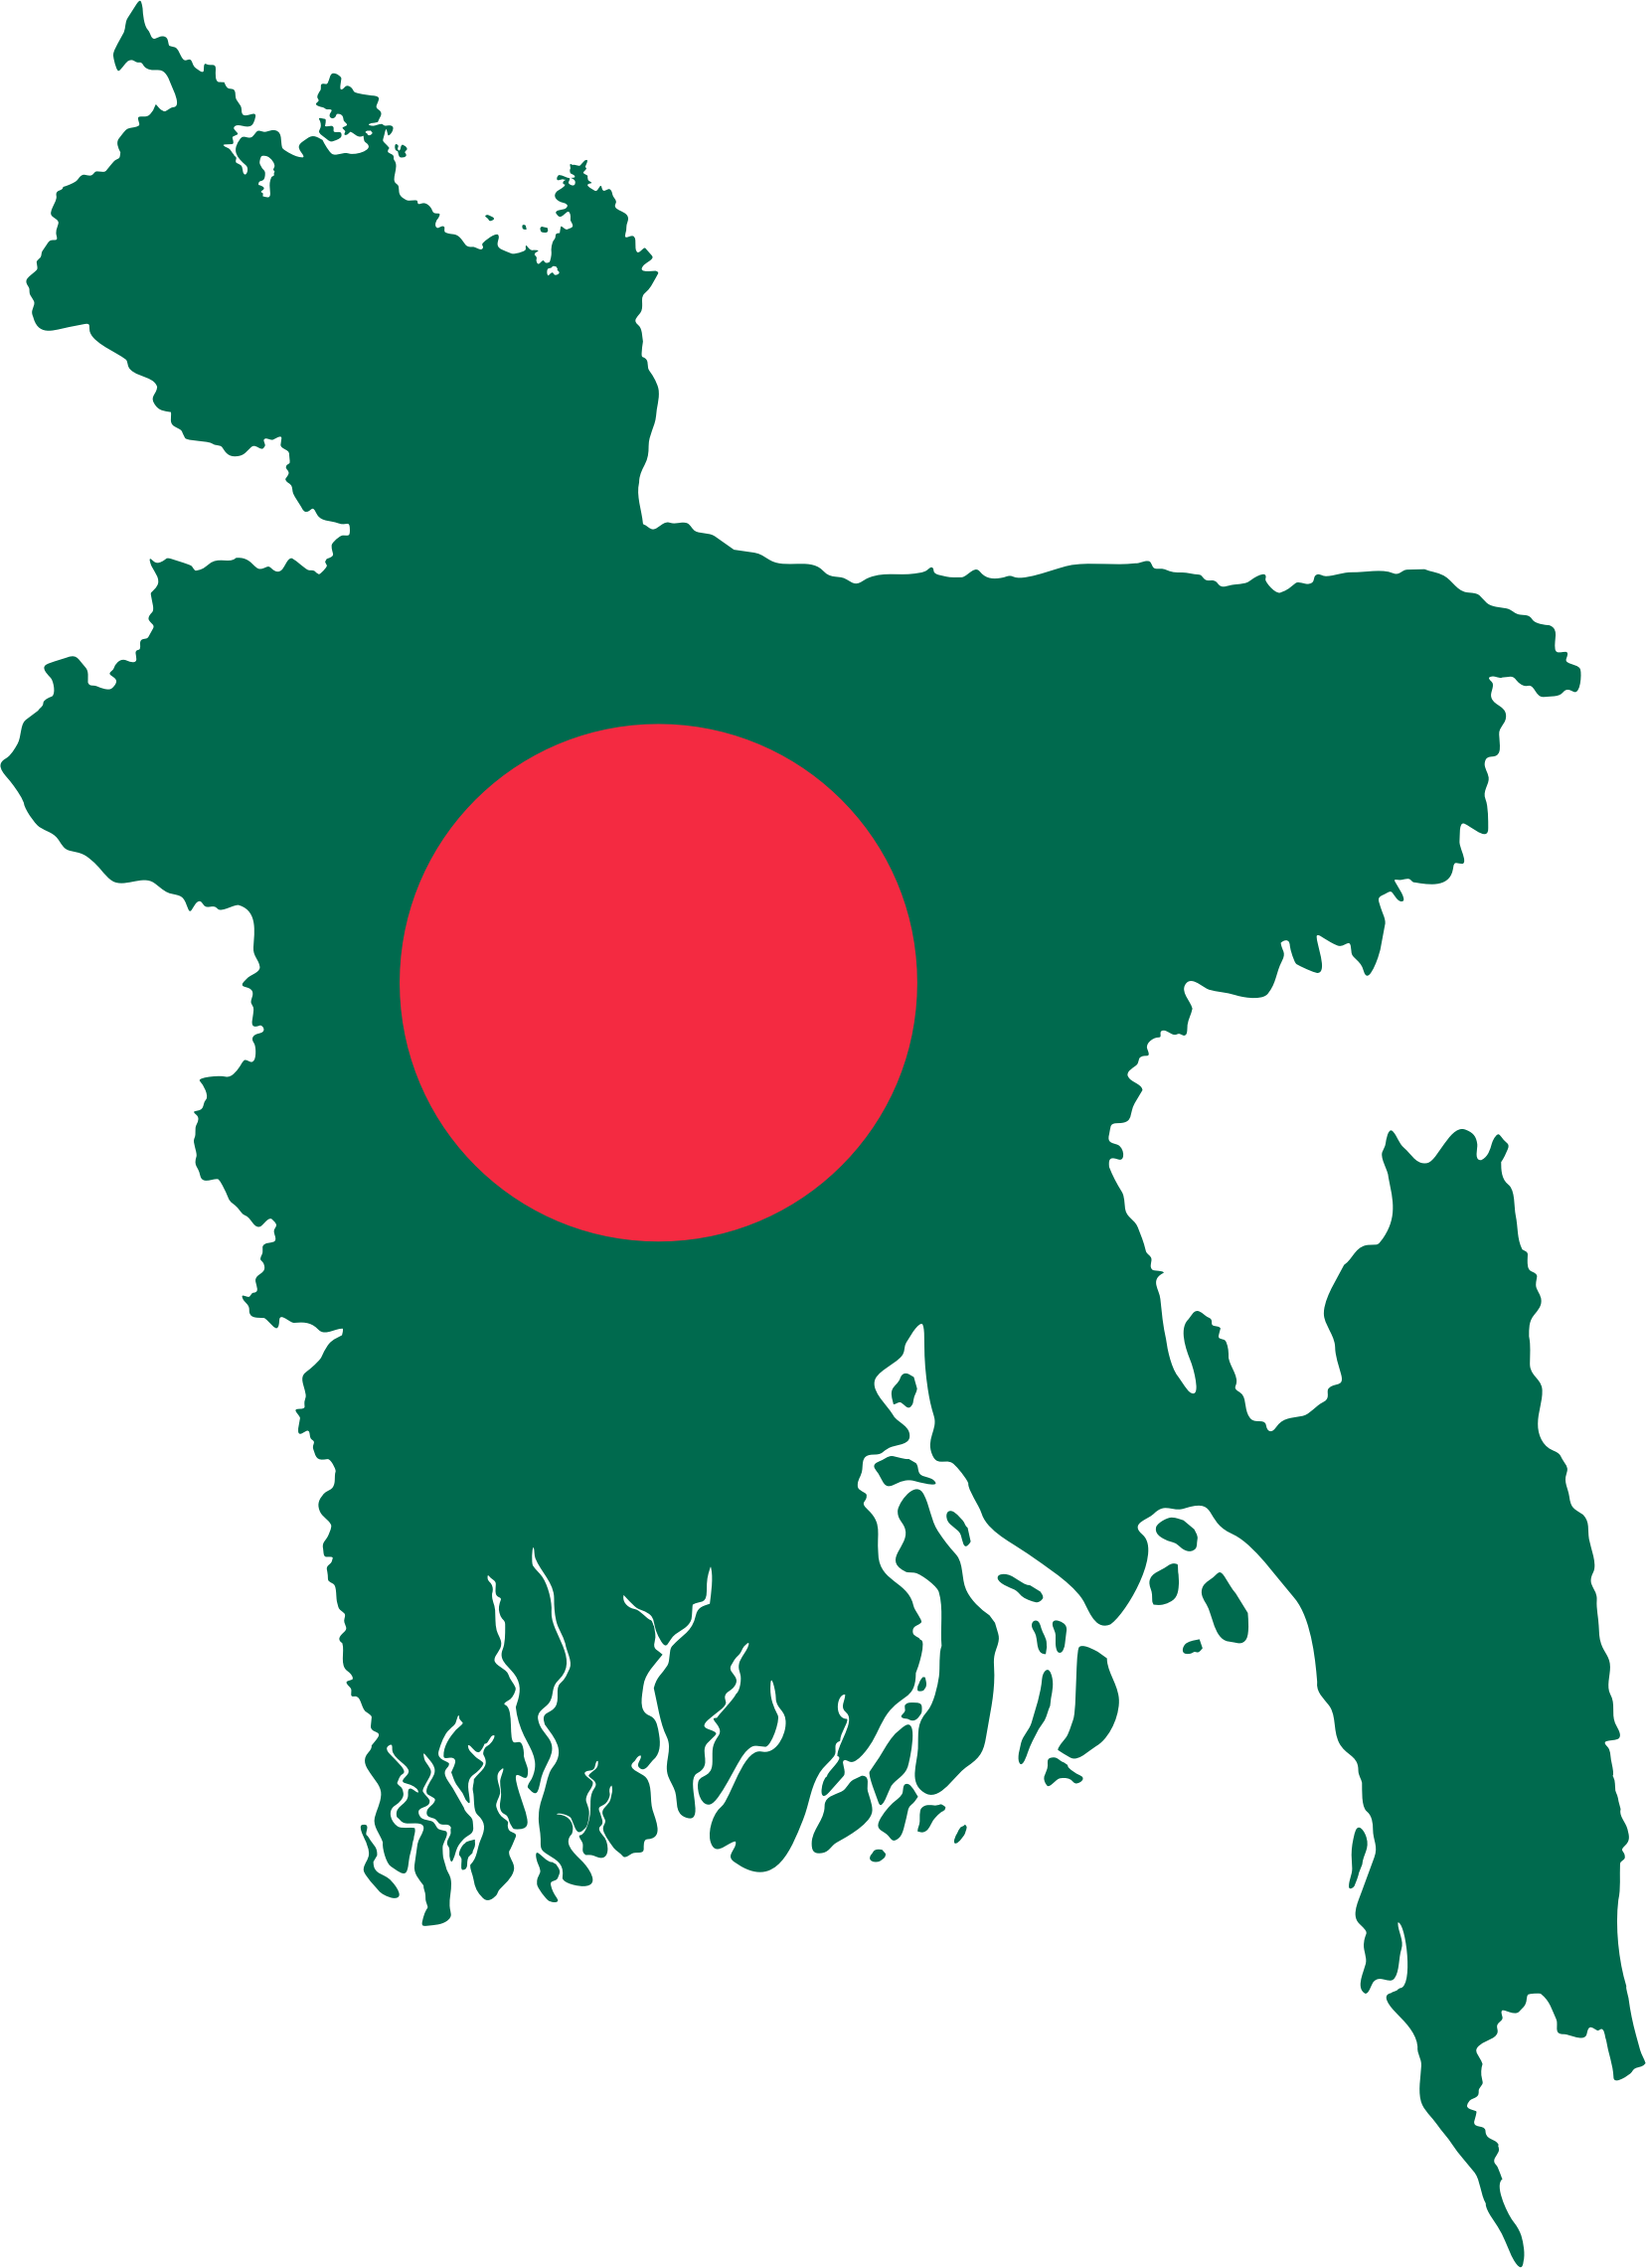 Bangladesh-Map-Flag.png